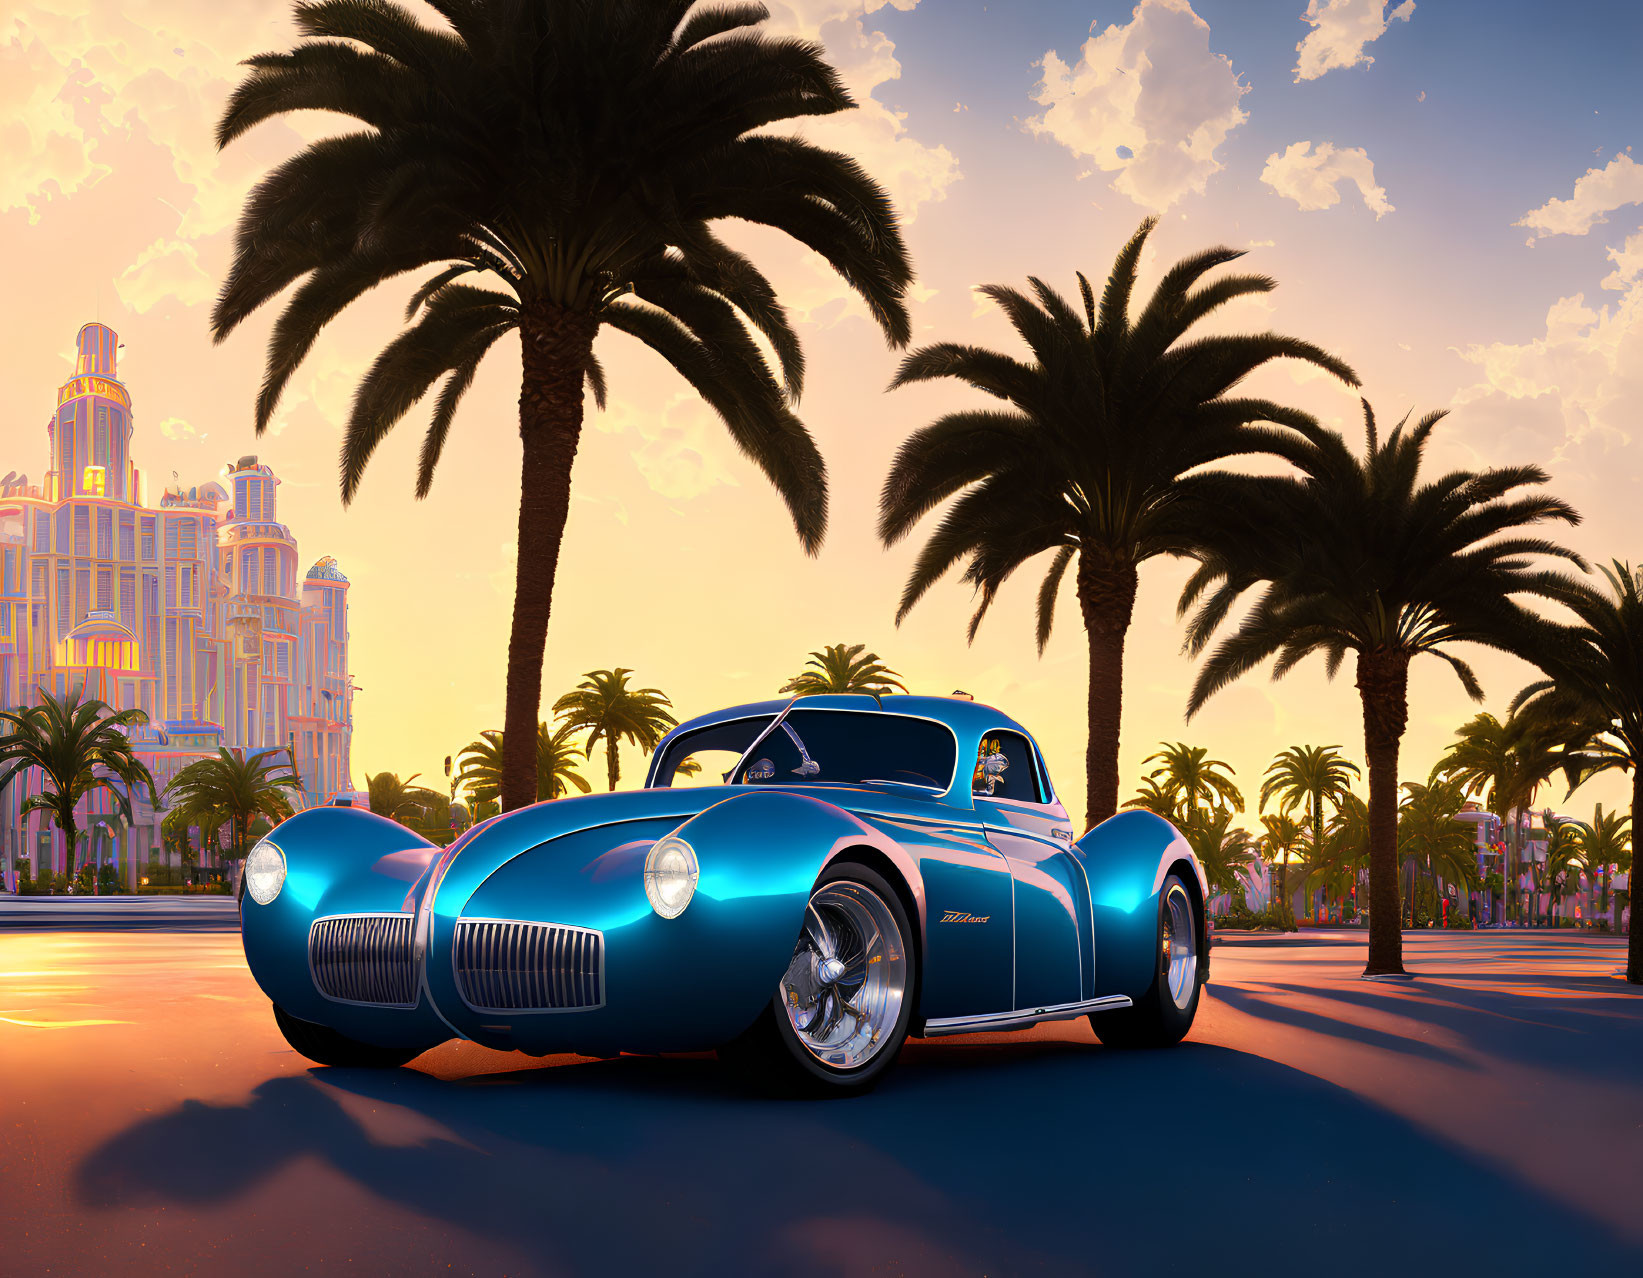 Vintage Blue Roadster on Palm-Lined Boulevard at Sunset